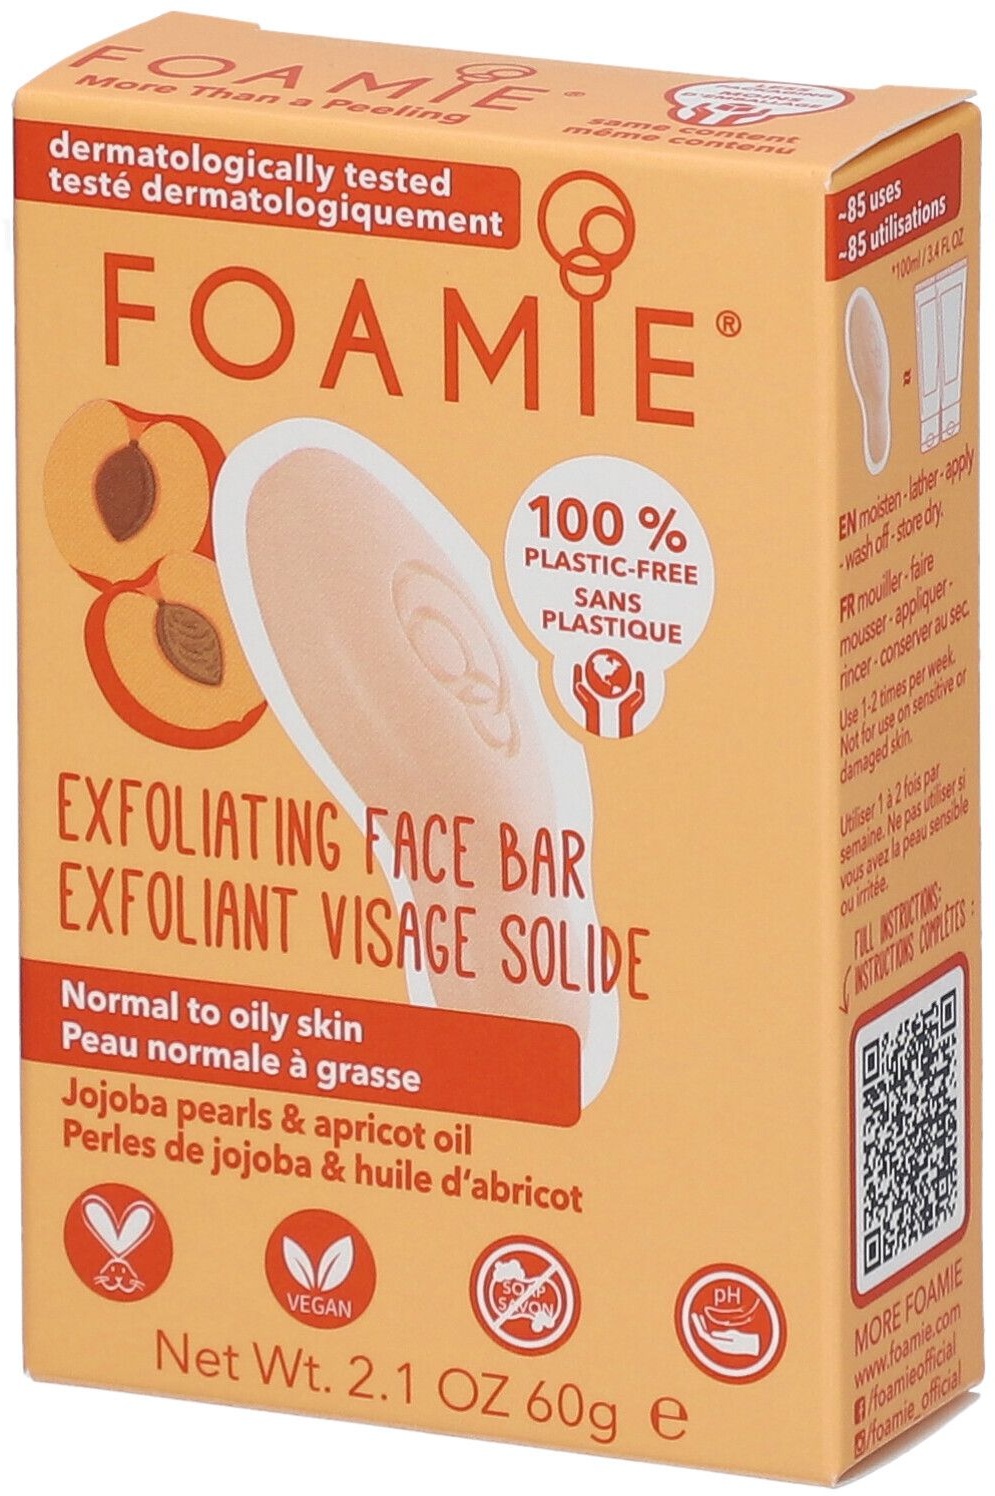 FOAMIE® EXFOLIANT VISAGE More Than A Peeling 60 g savon